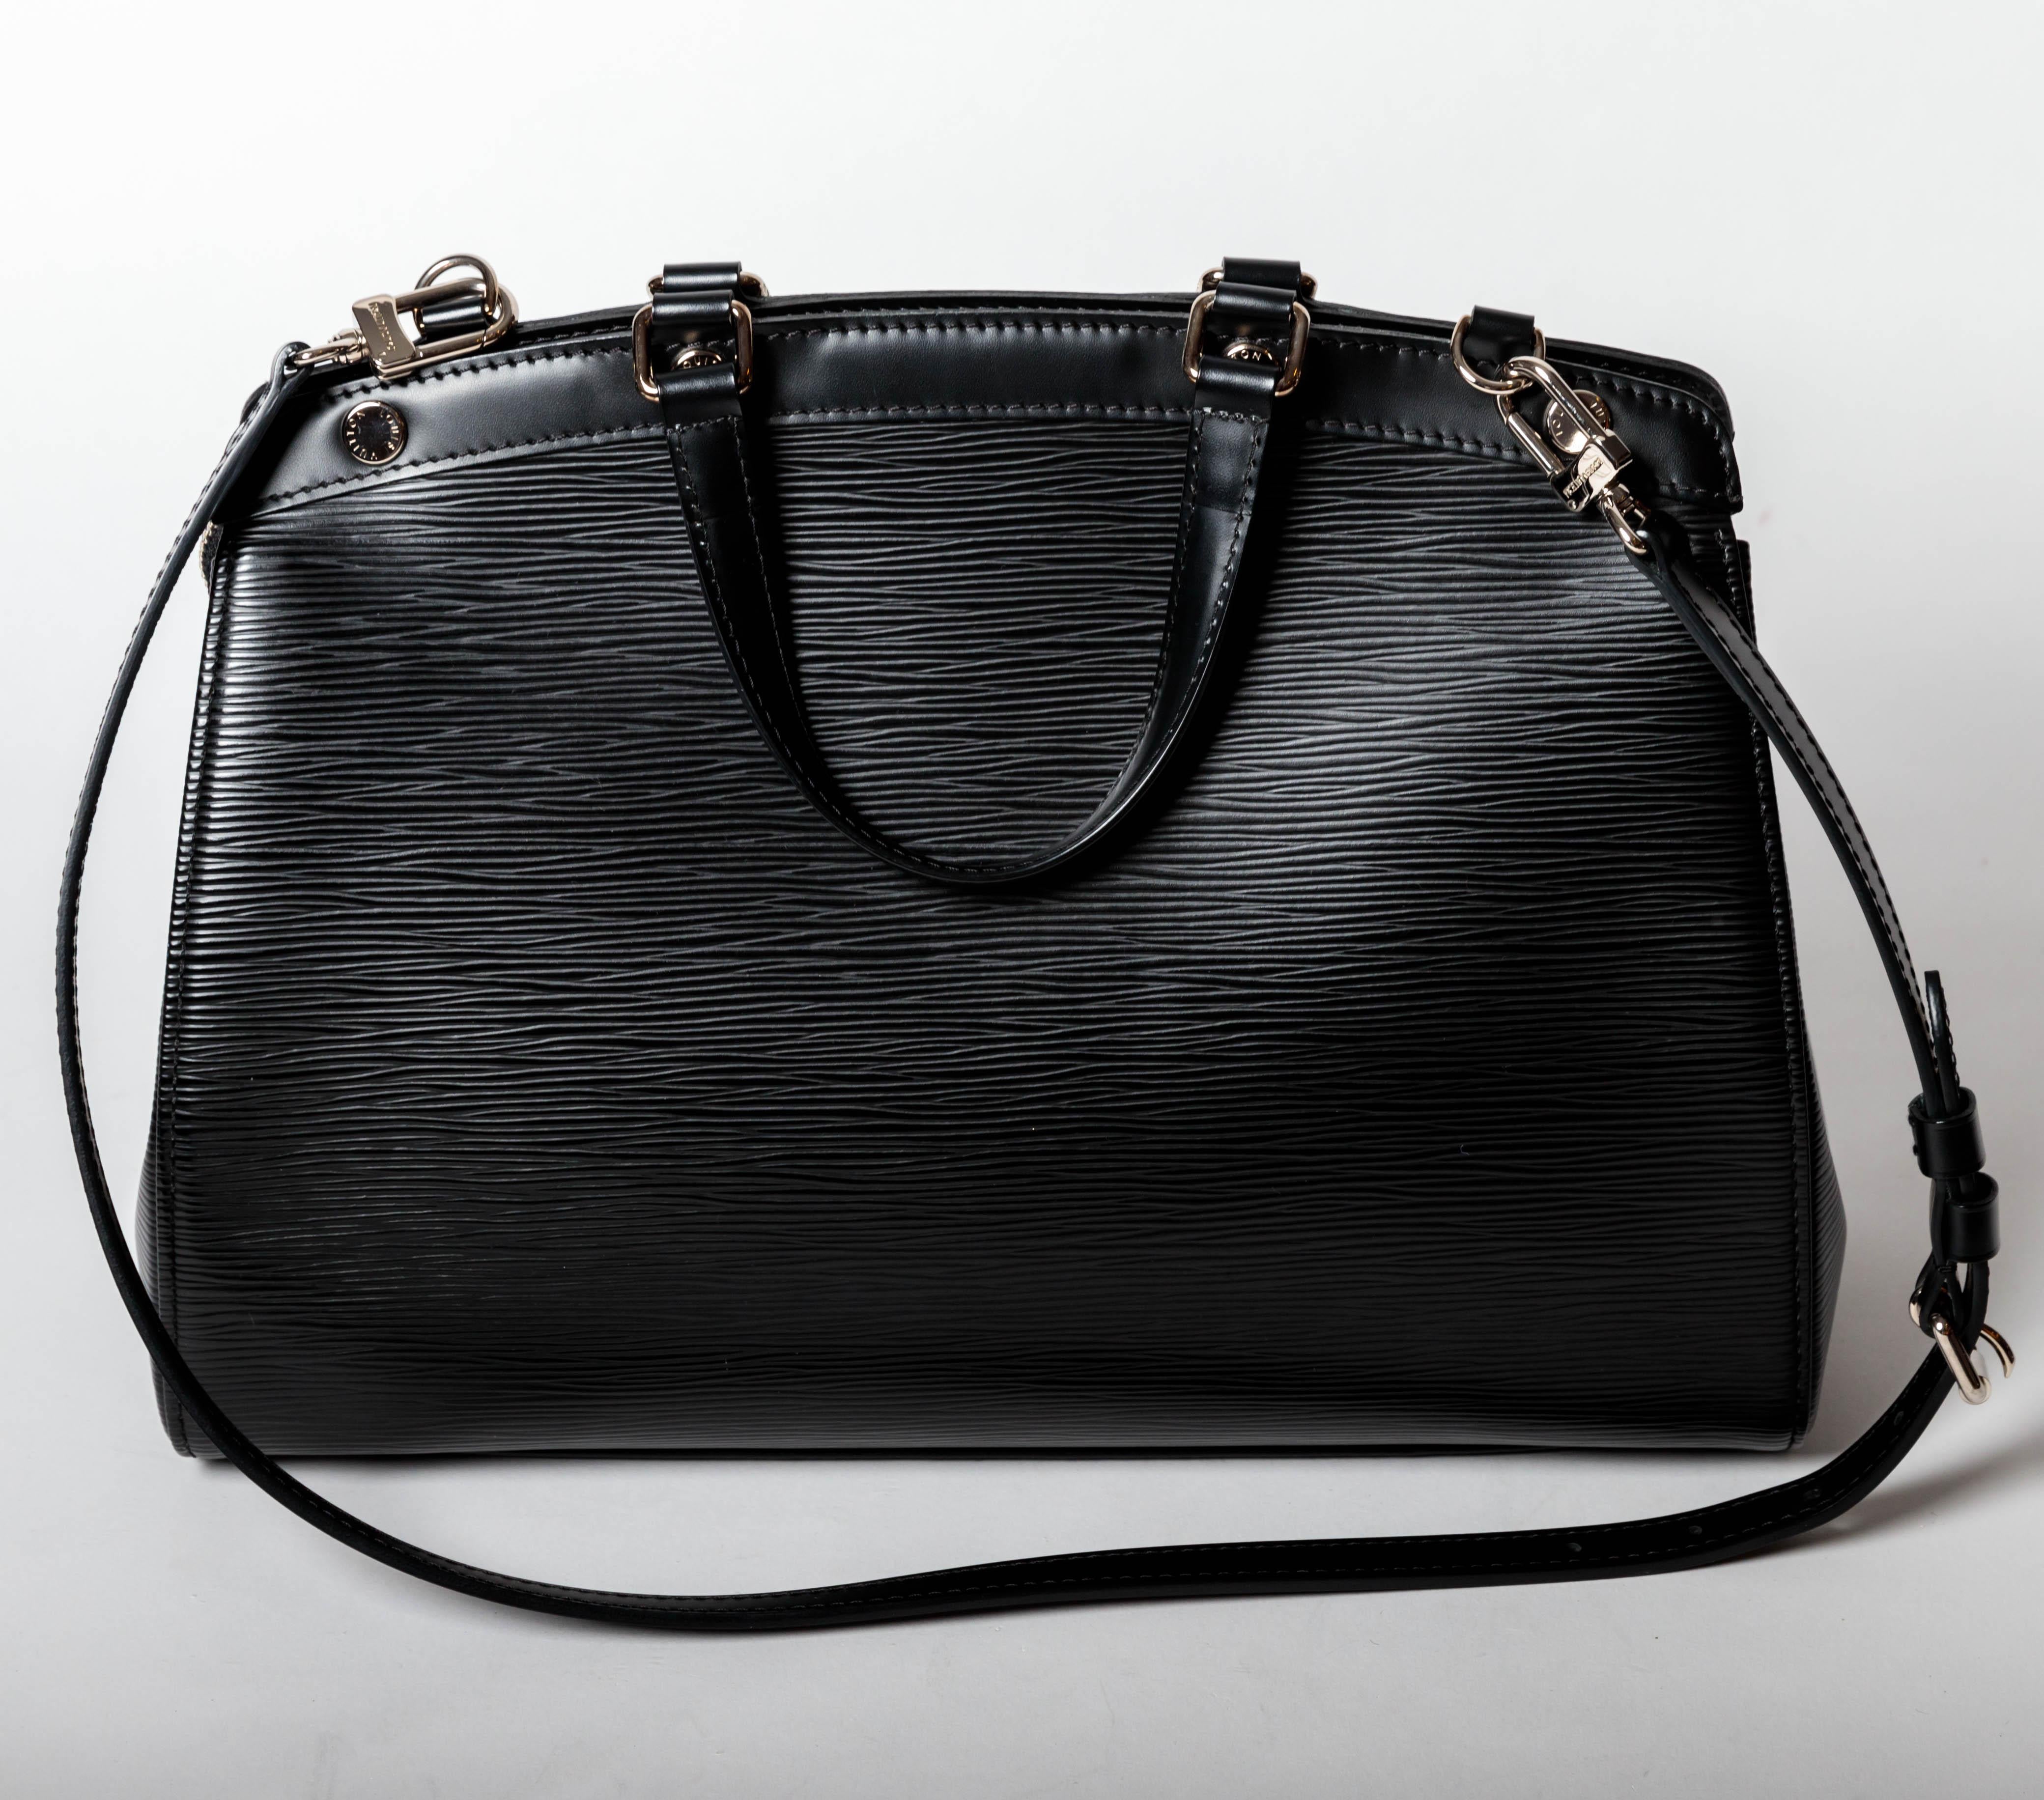 Louis Vuitton Black Epi Bag with Top Handle and Shoulder Strap For Sale 1